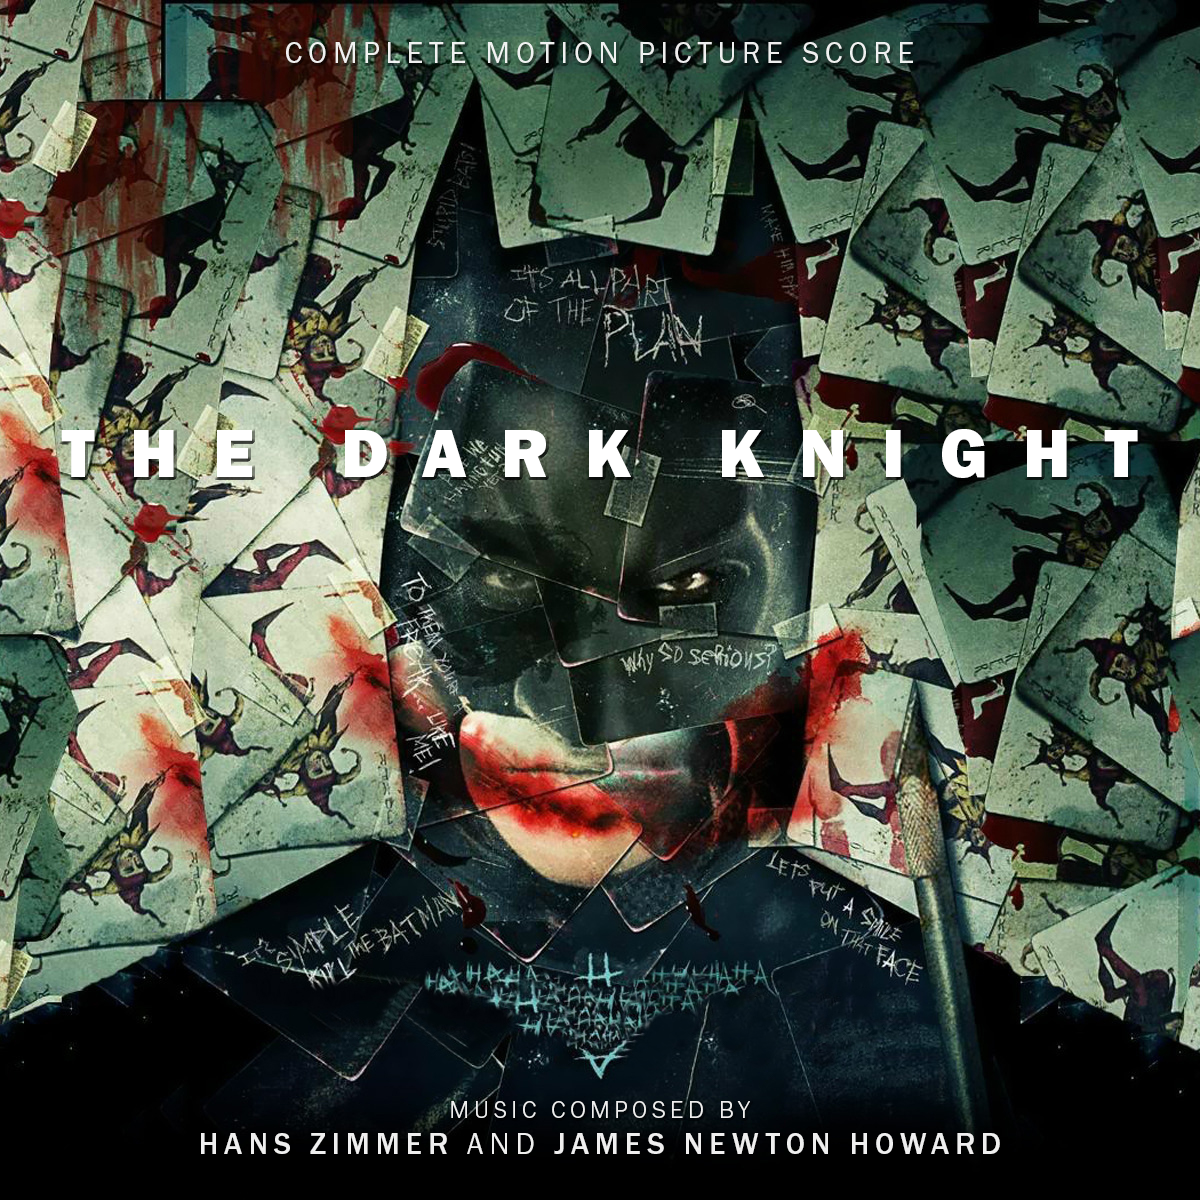 The Dark Knight Alternate Album Cover 2 by VELIProductions on DeviantArt